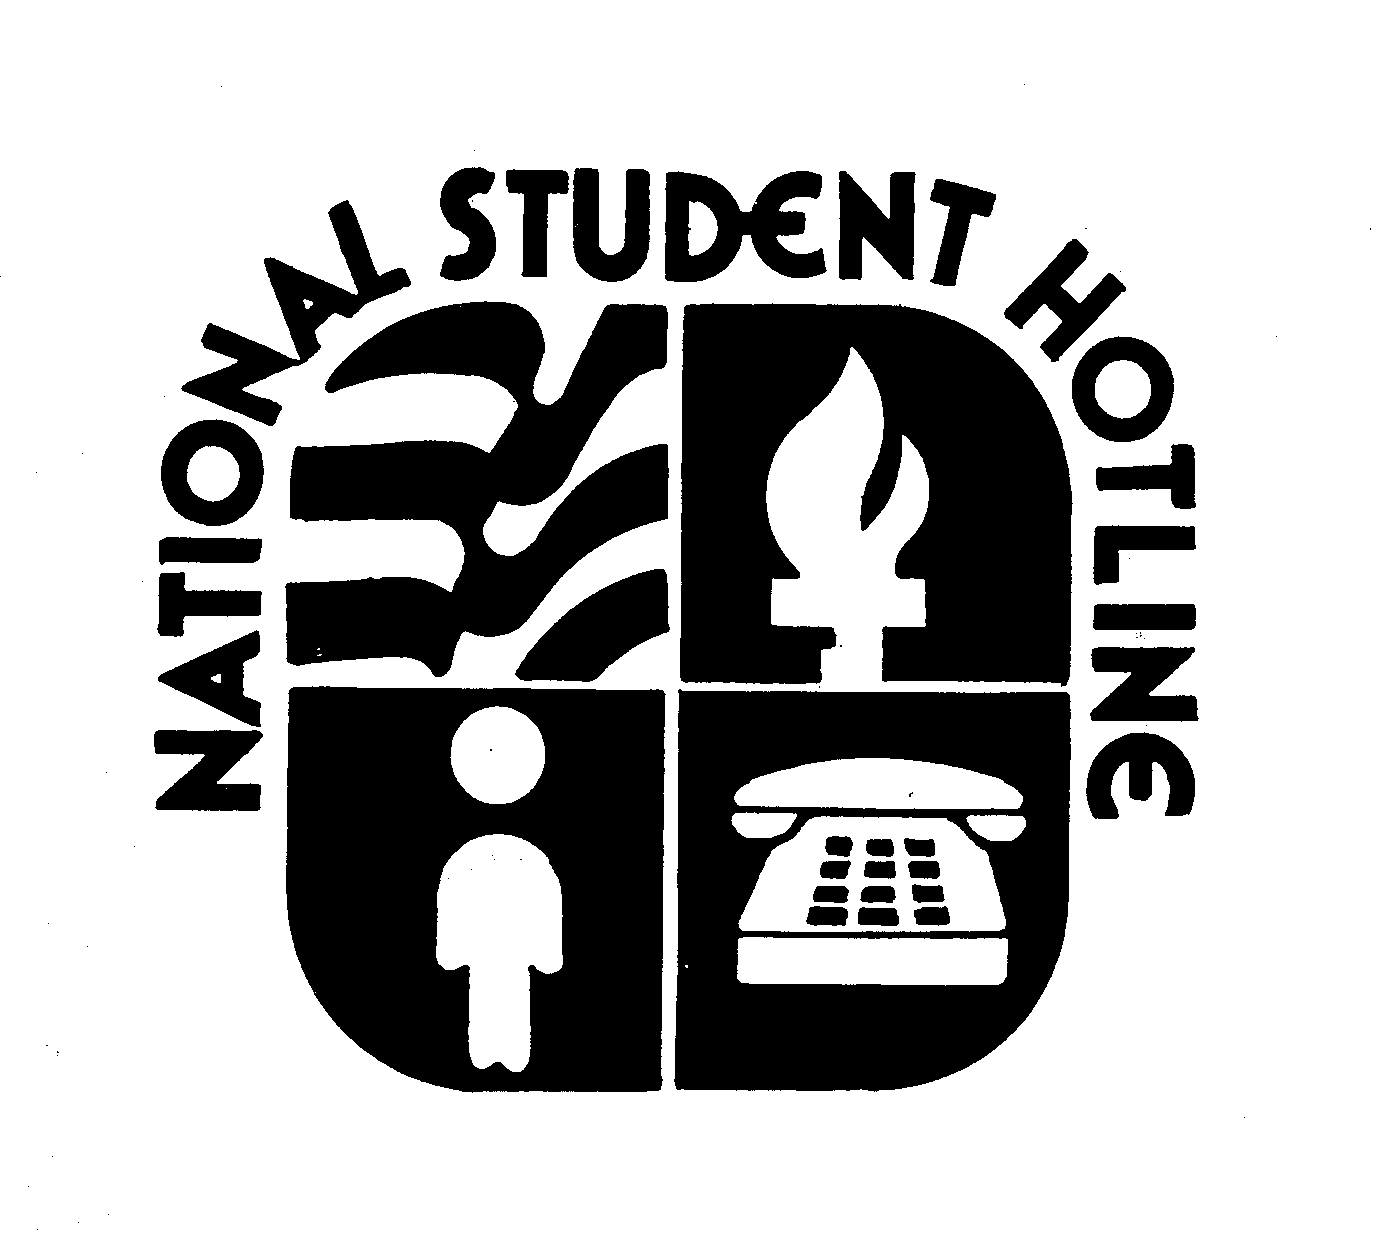  NATIONAL STUDENT HOTLINE